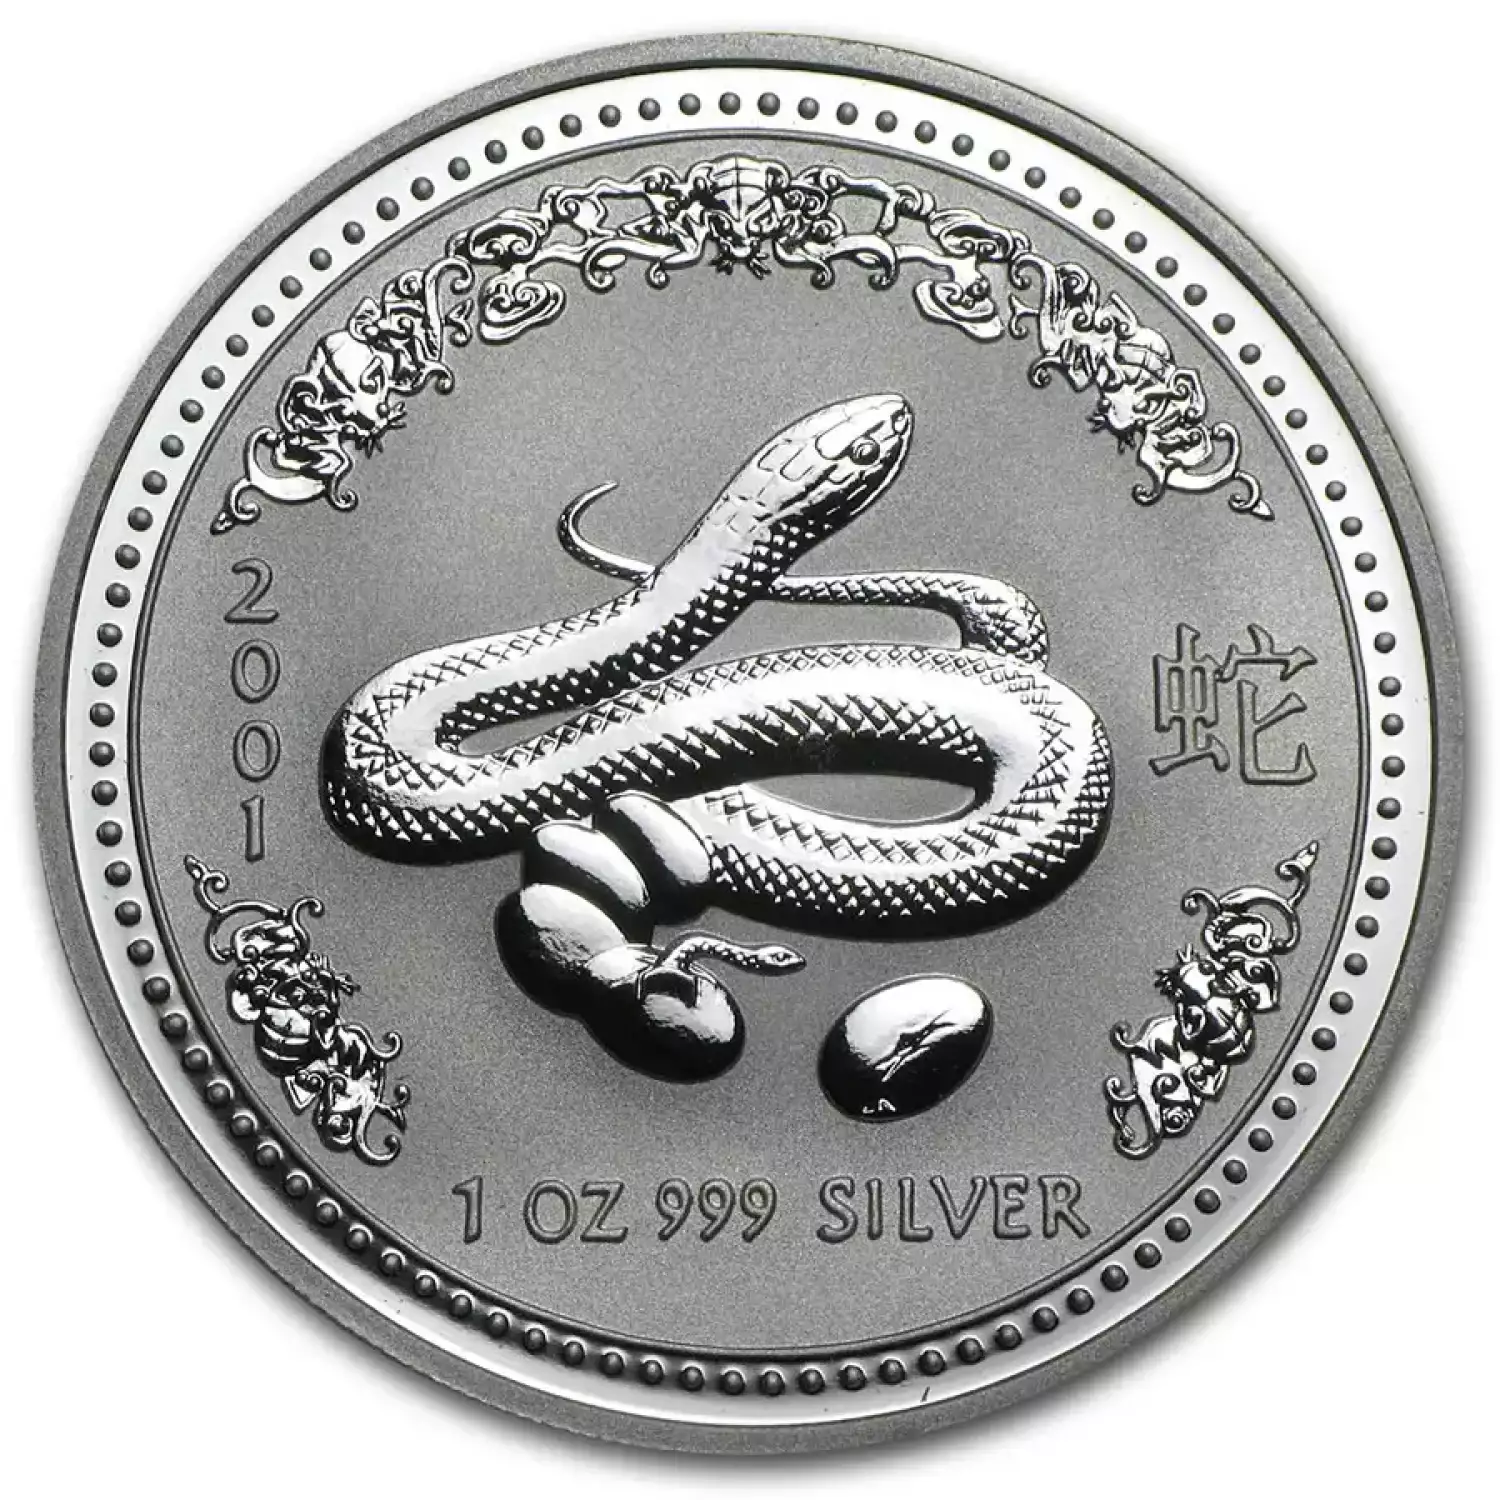 2001 1oz Australian Perth Mint Silver Lunar: Year of the Snake